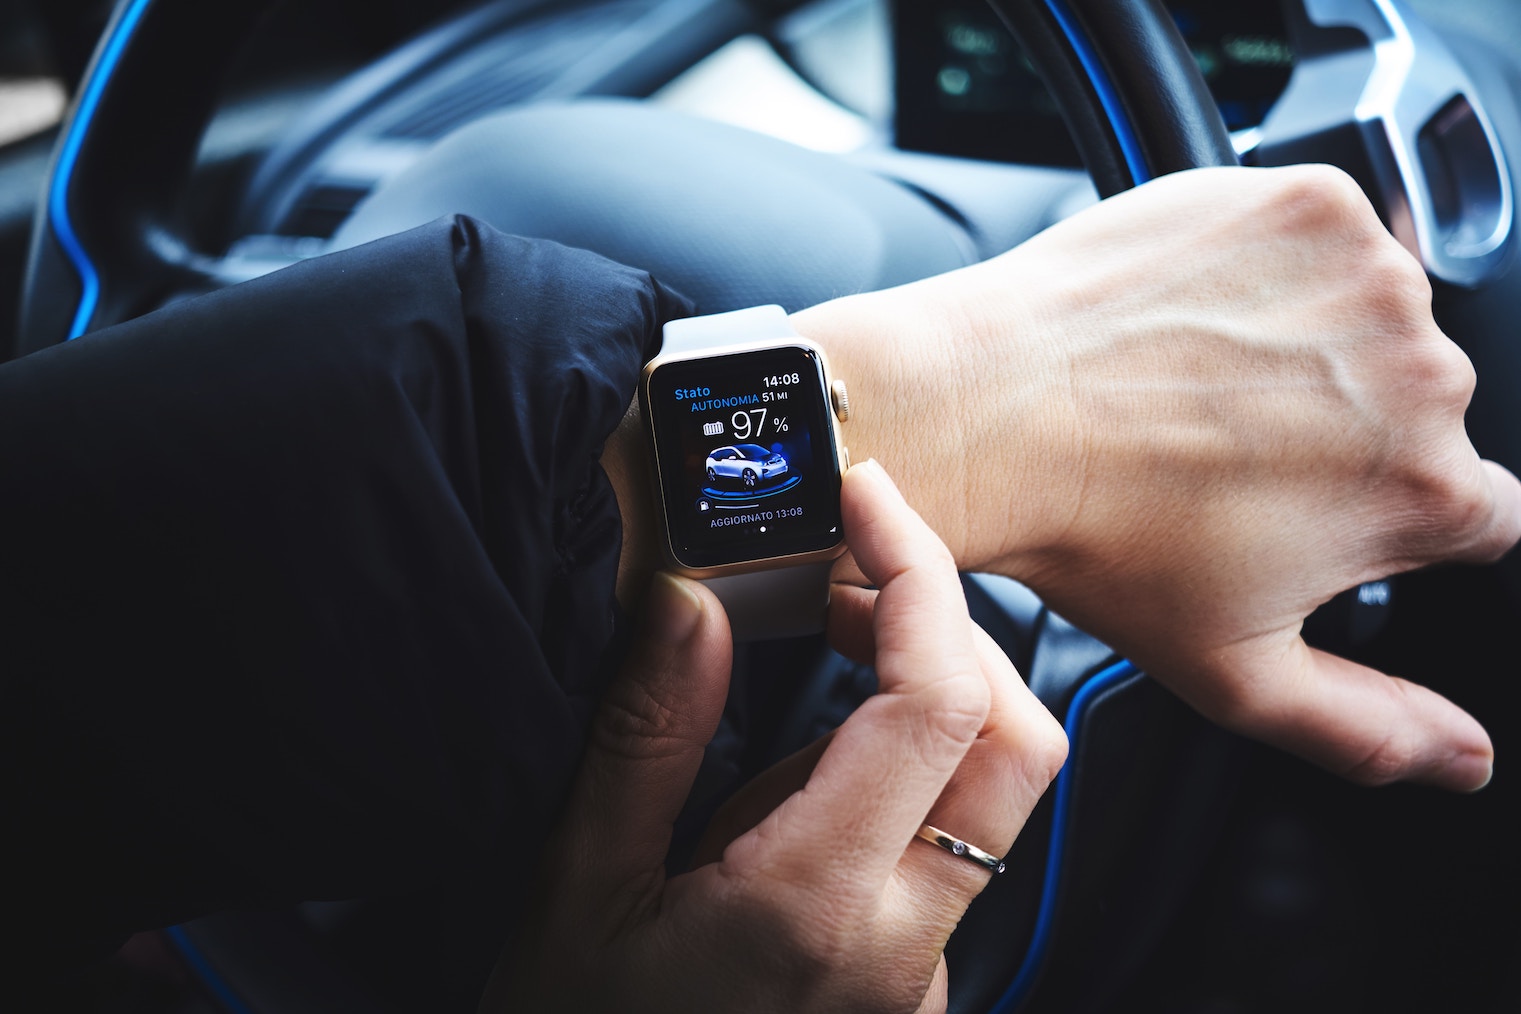 Adjusting car settings via a smart watch